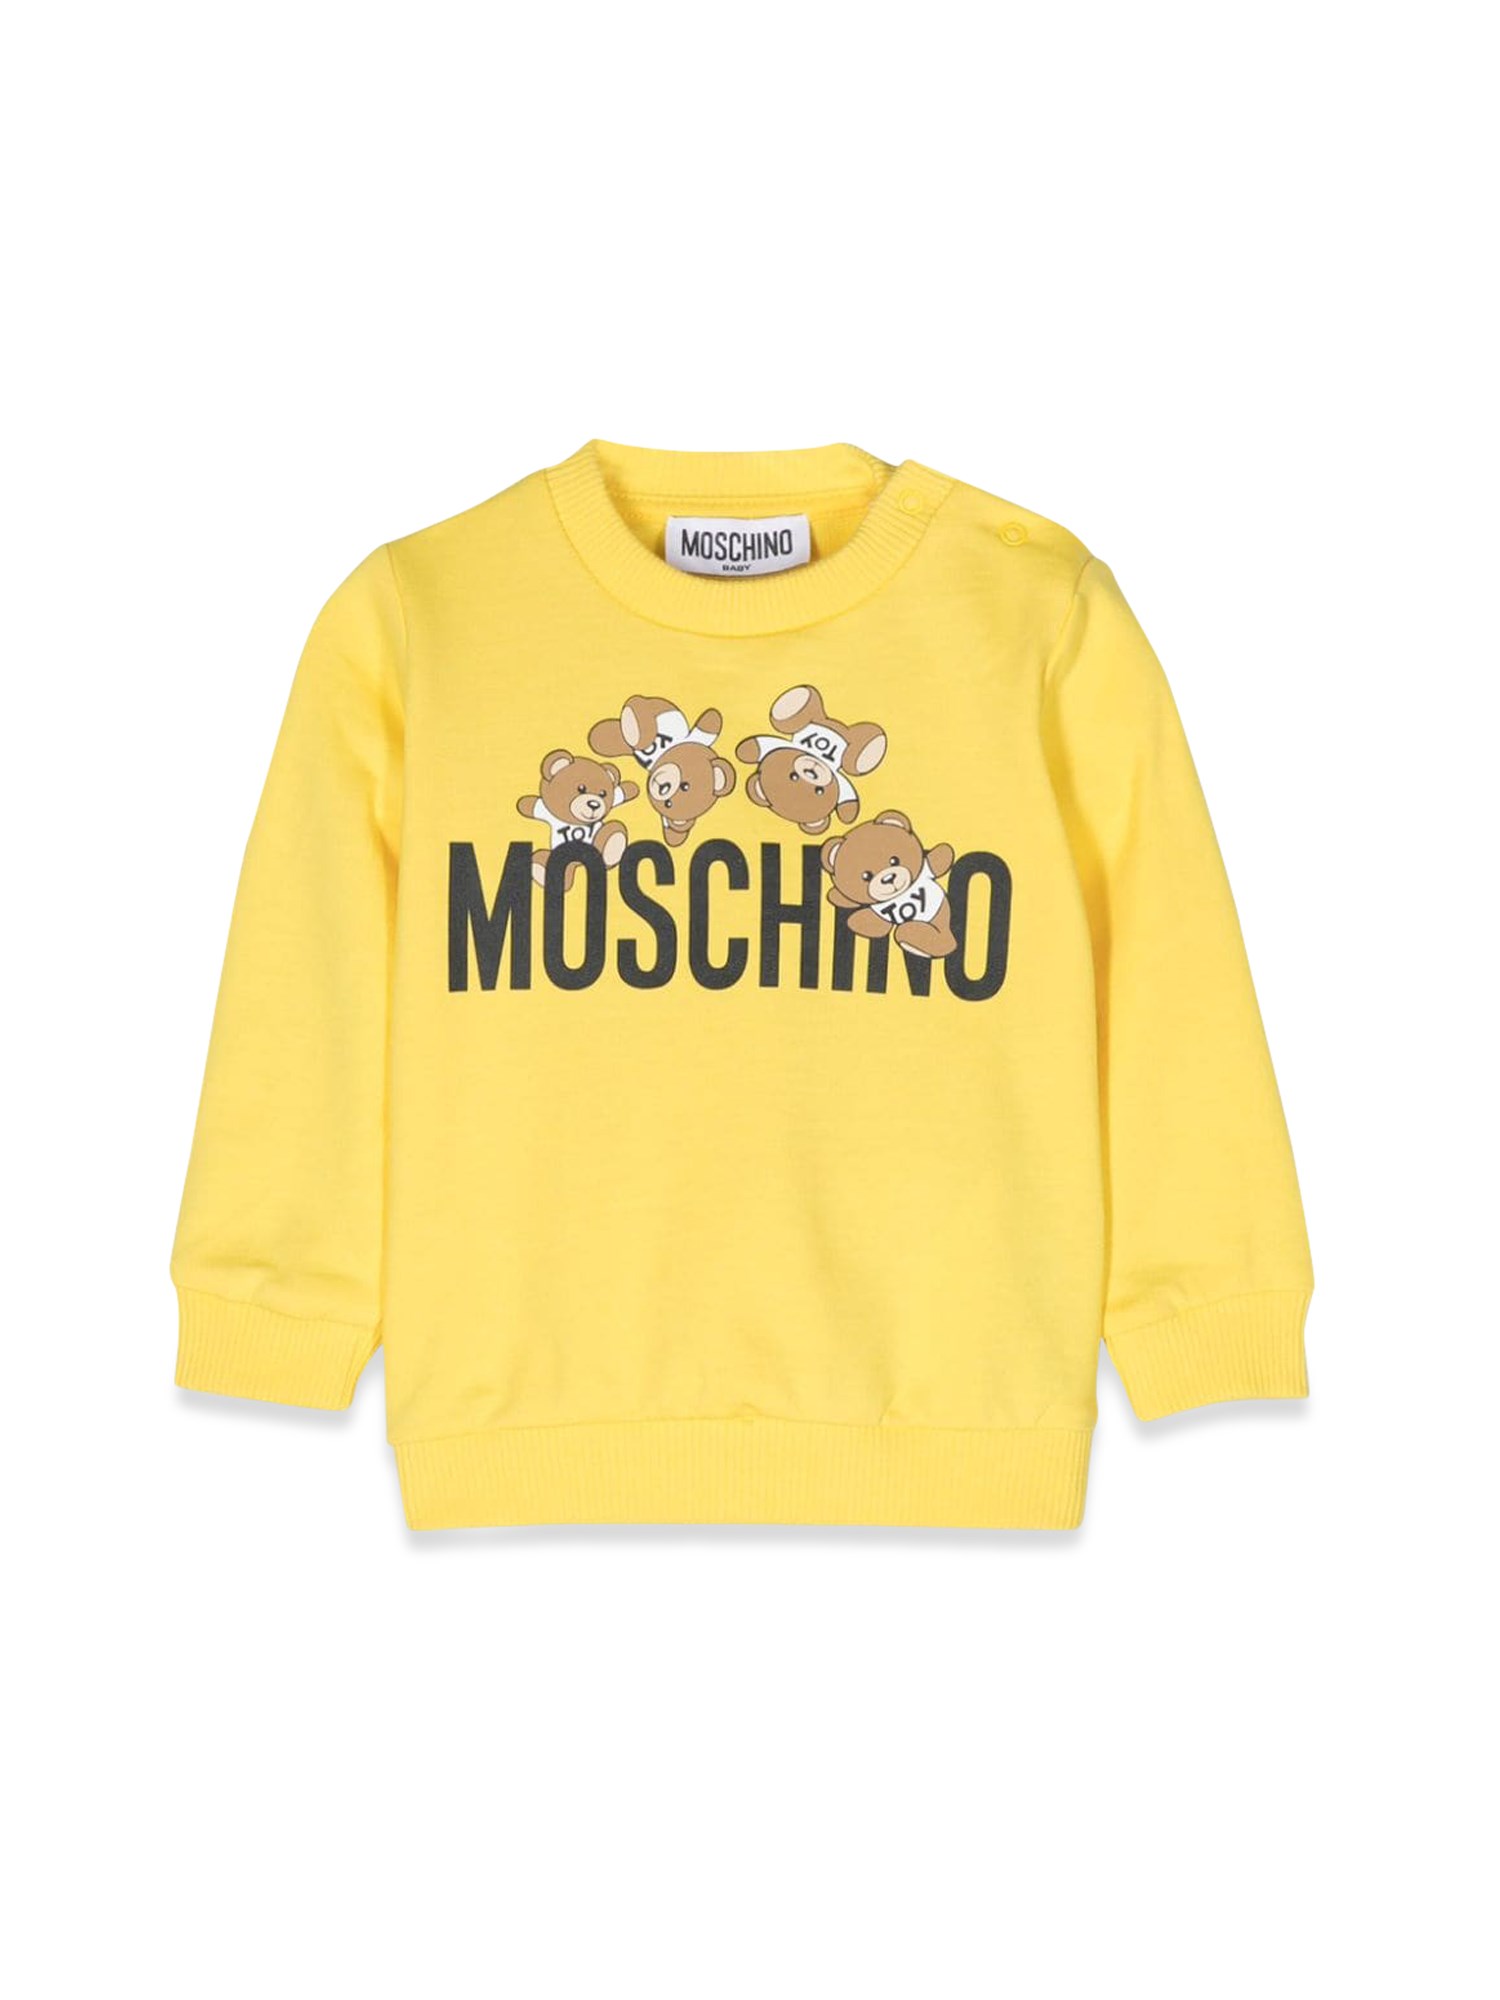 Moschino moschino sweatshirt